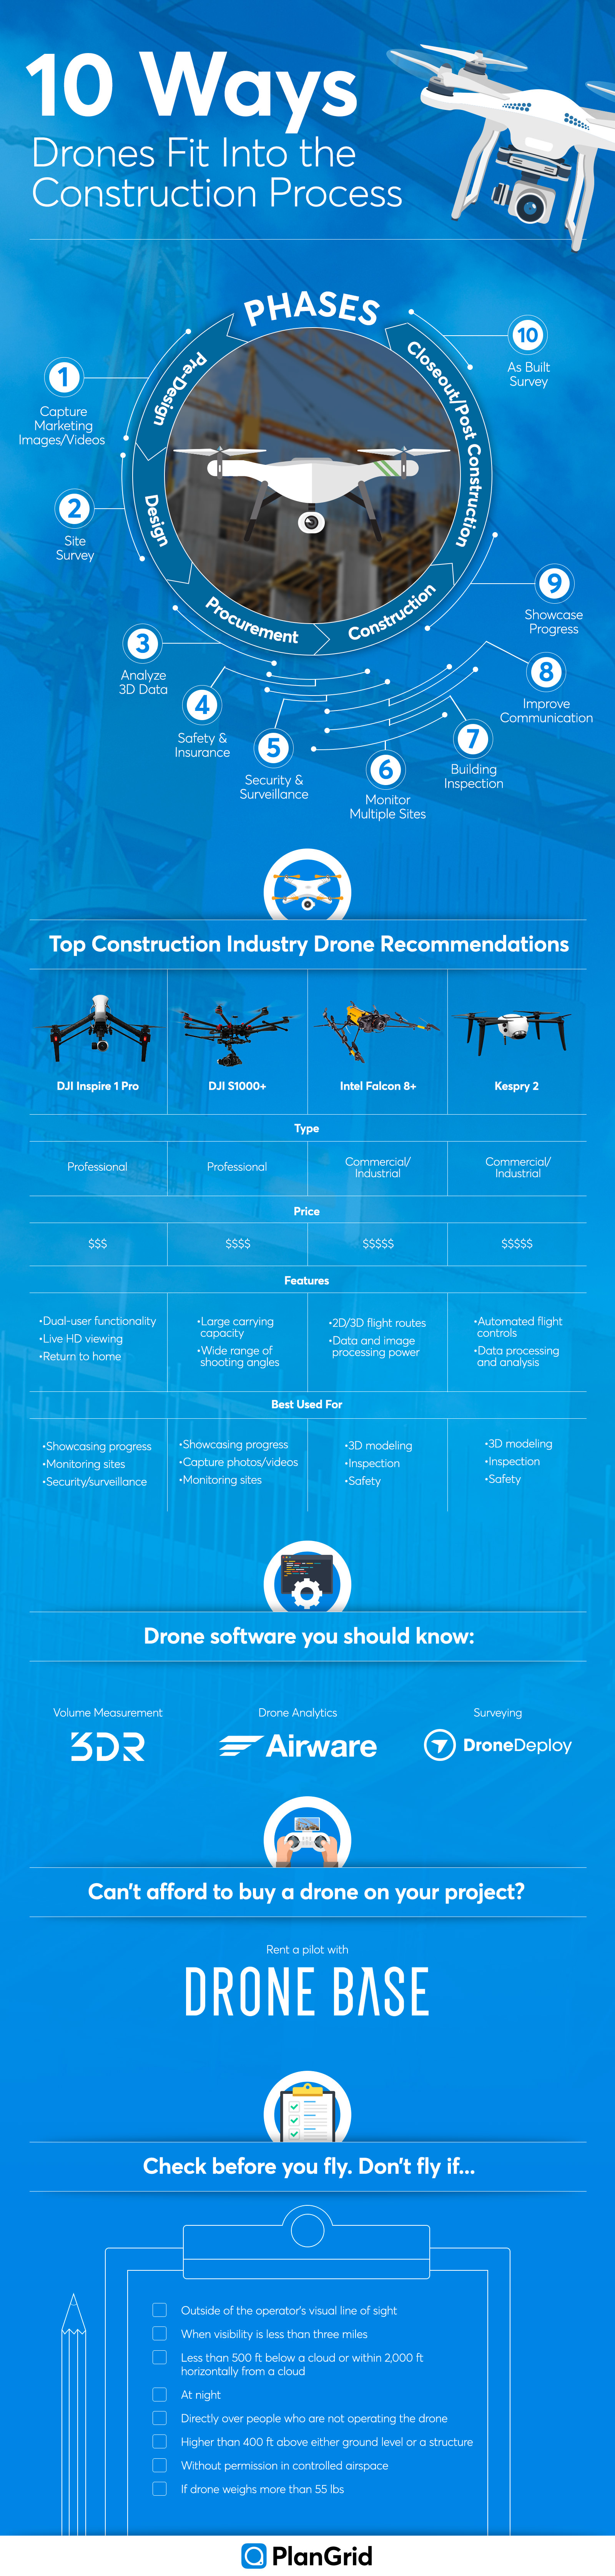 drones in construction supergraphic